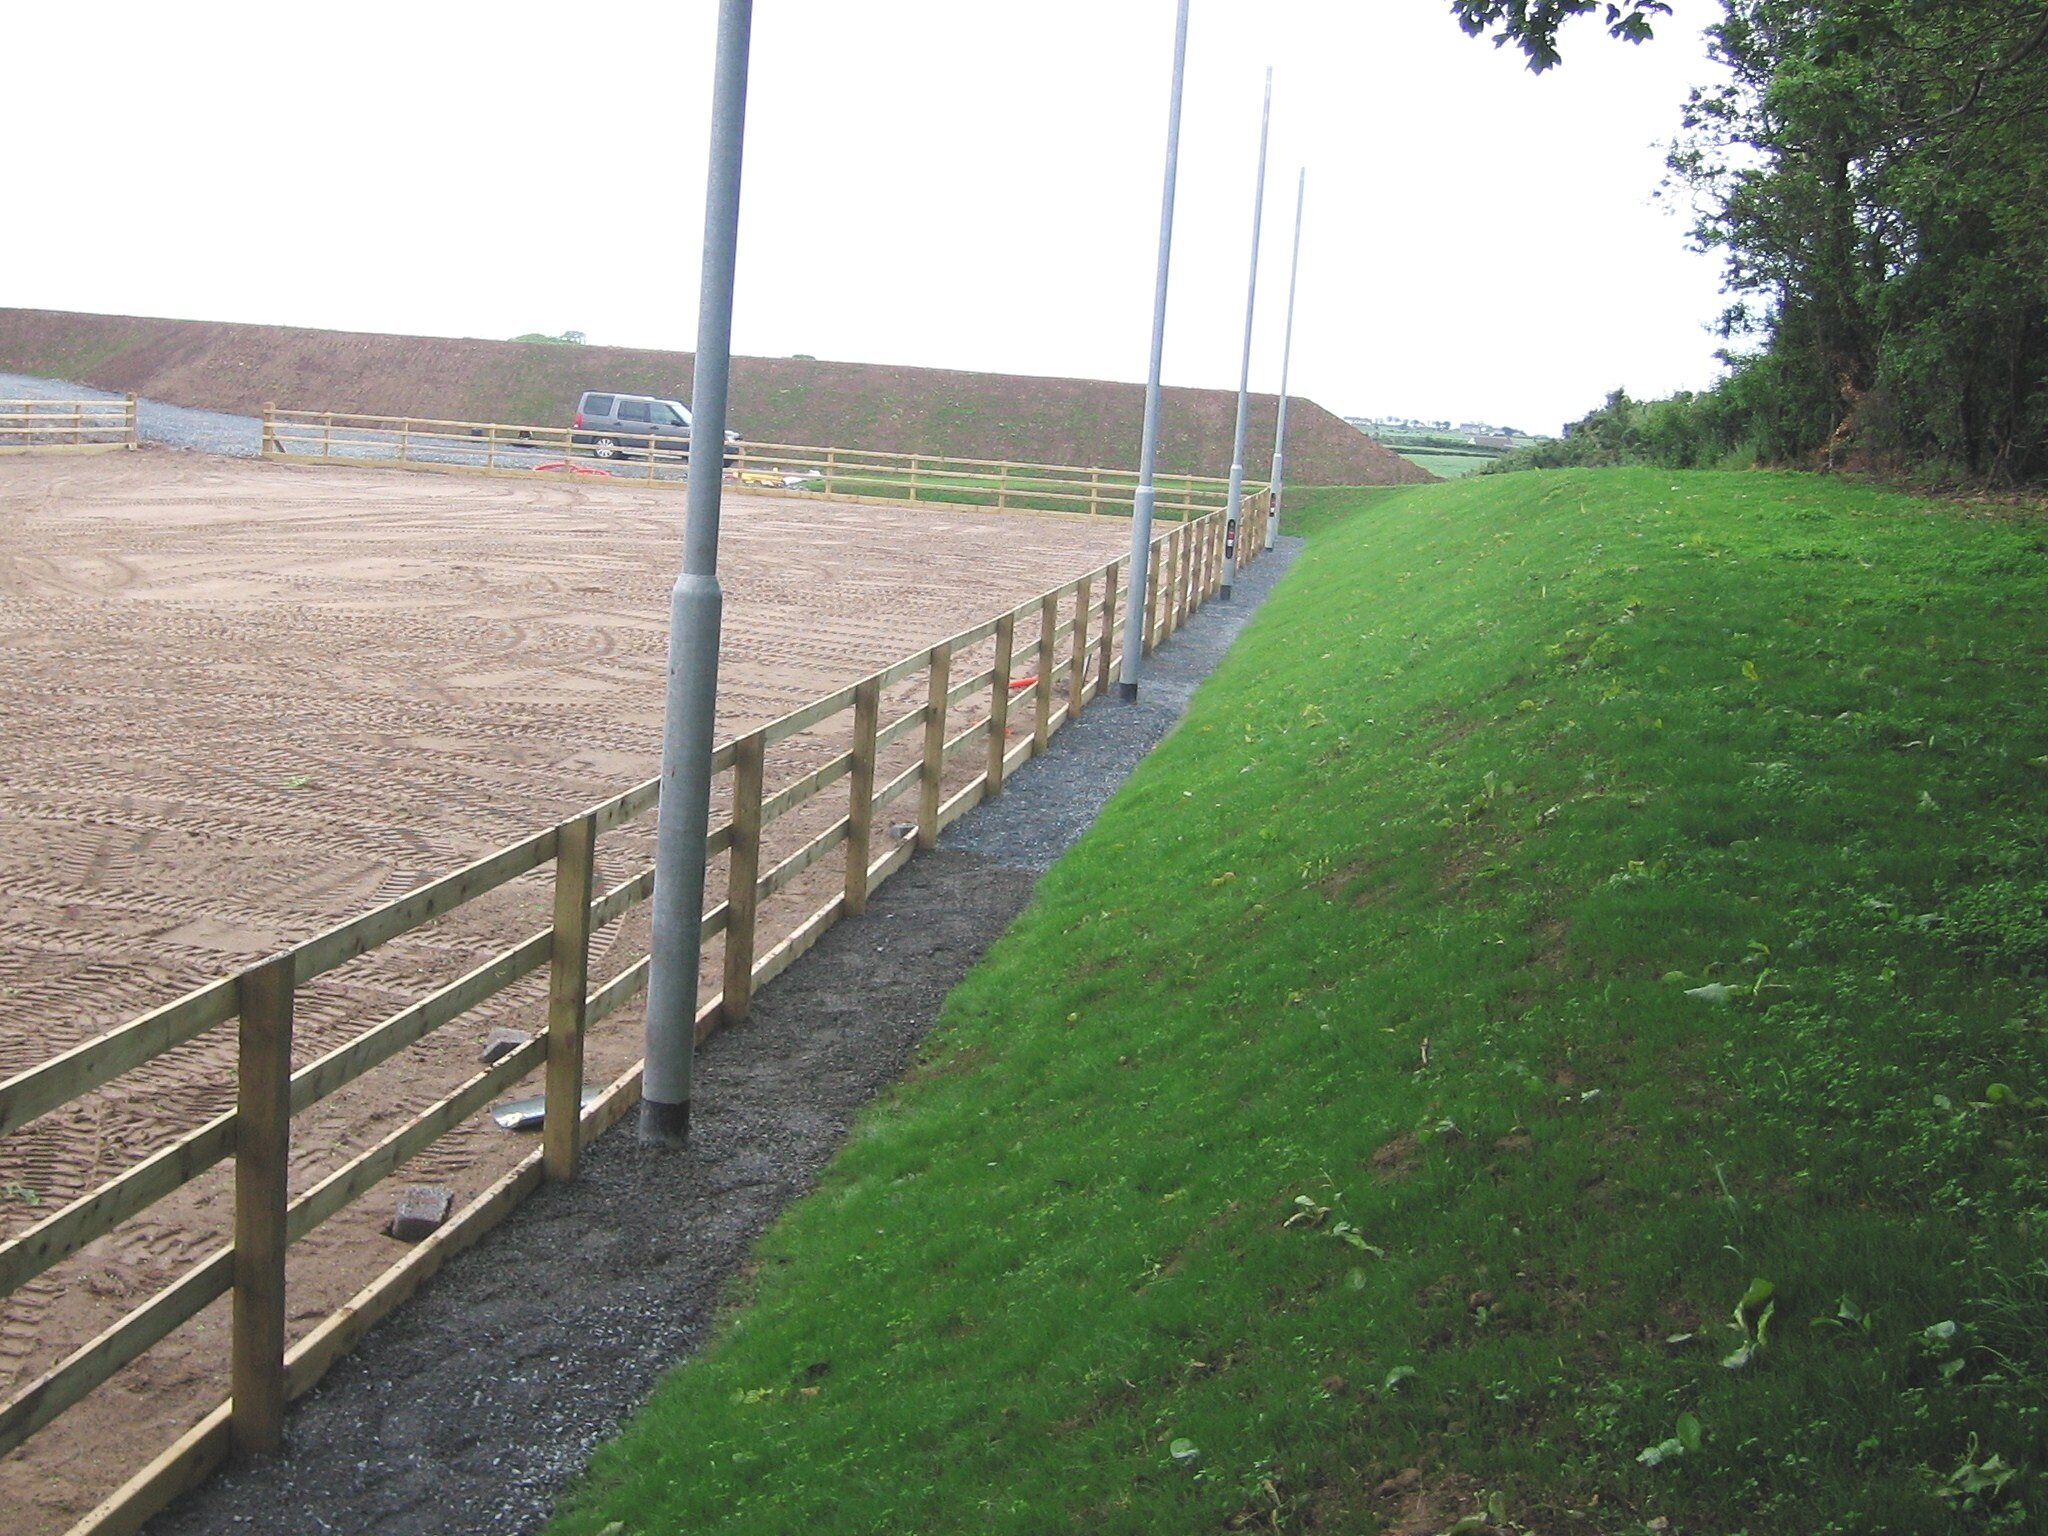 equestrian arena design landscaping northern ireland